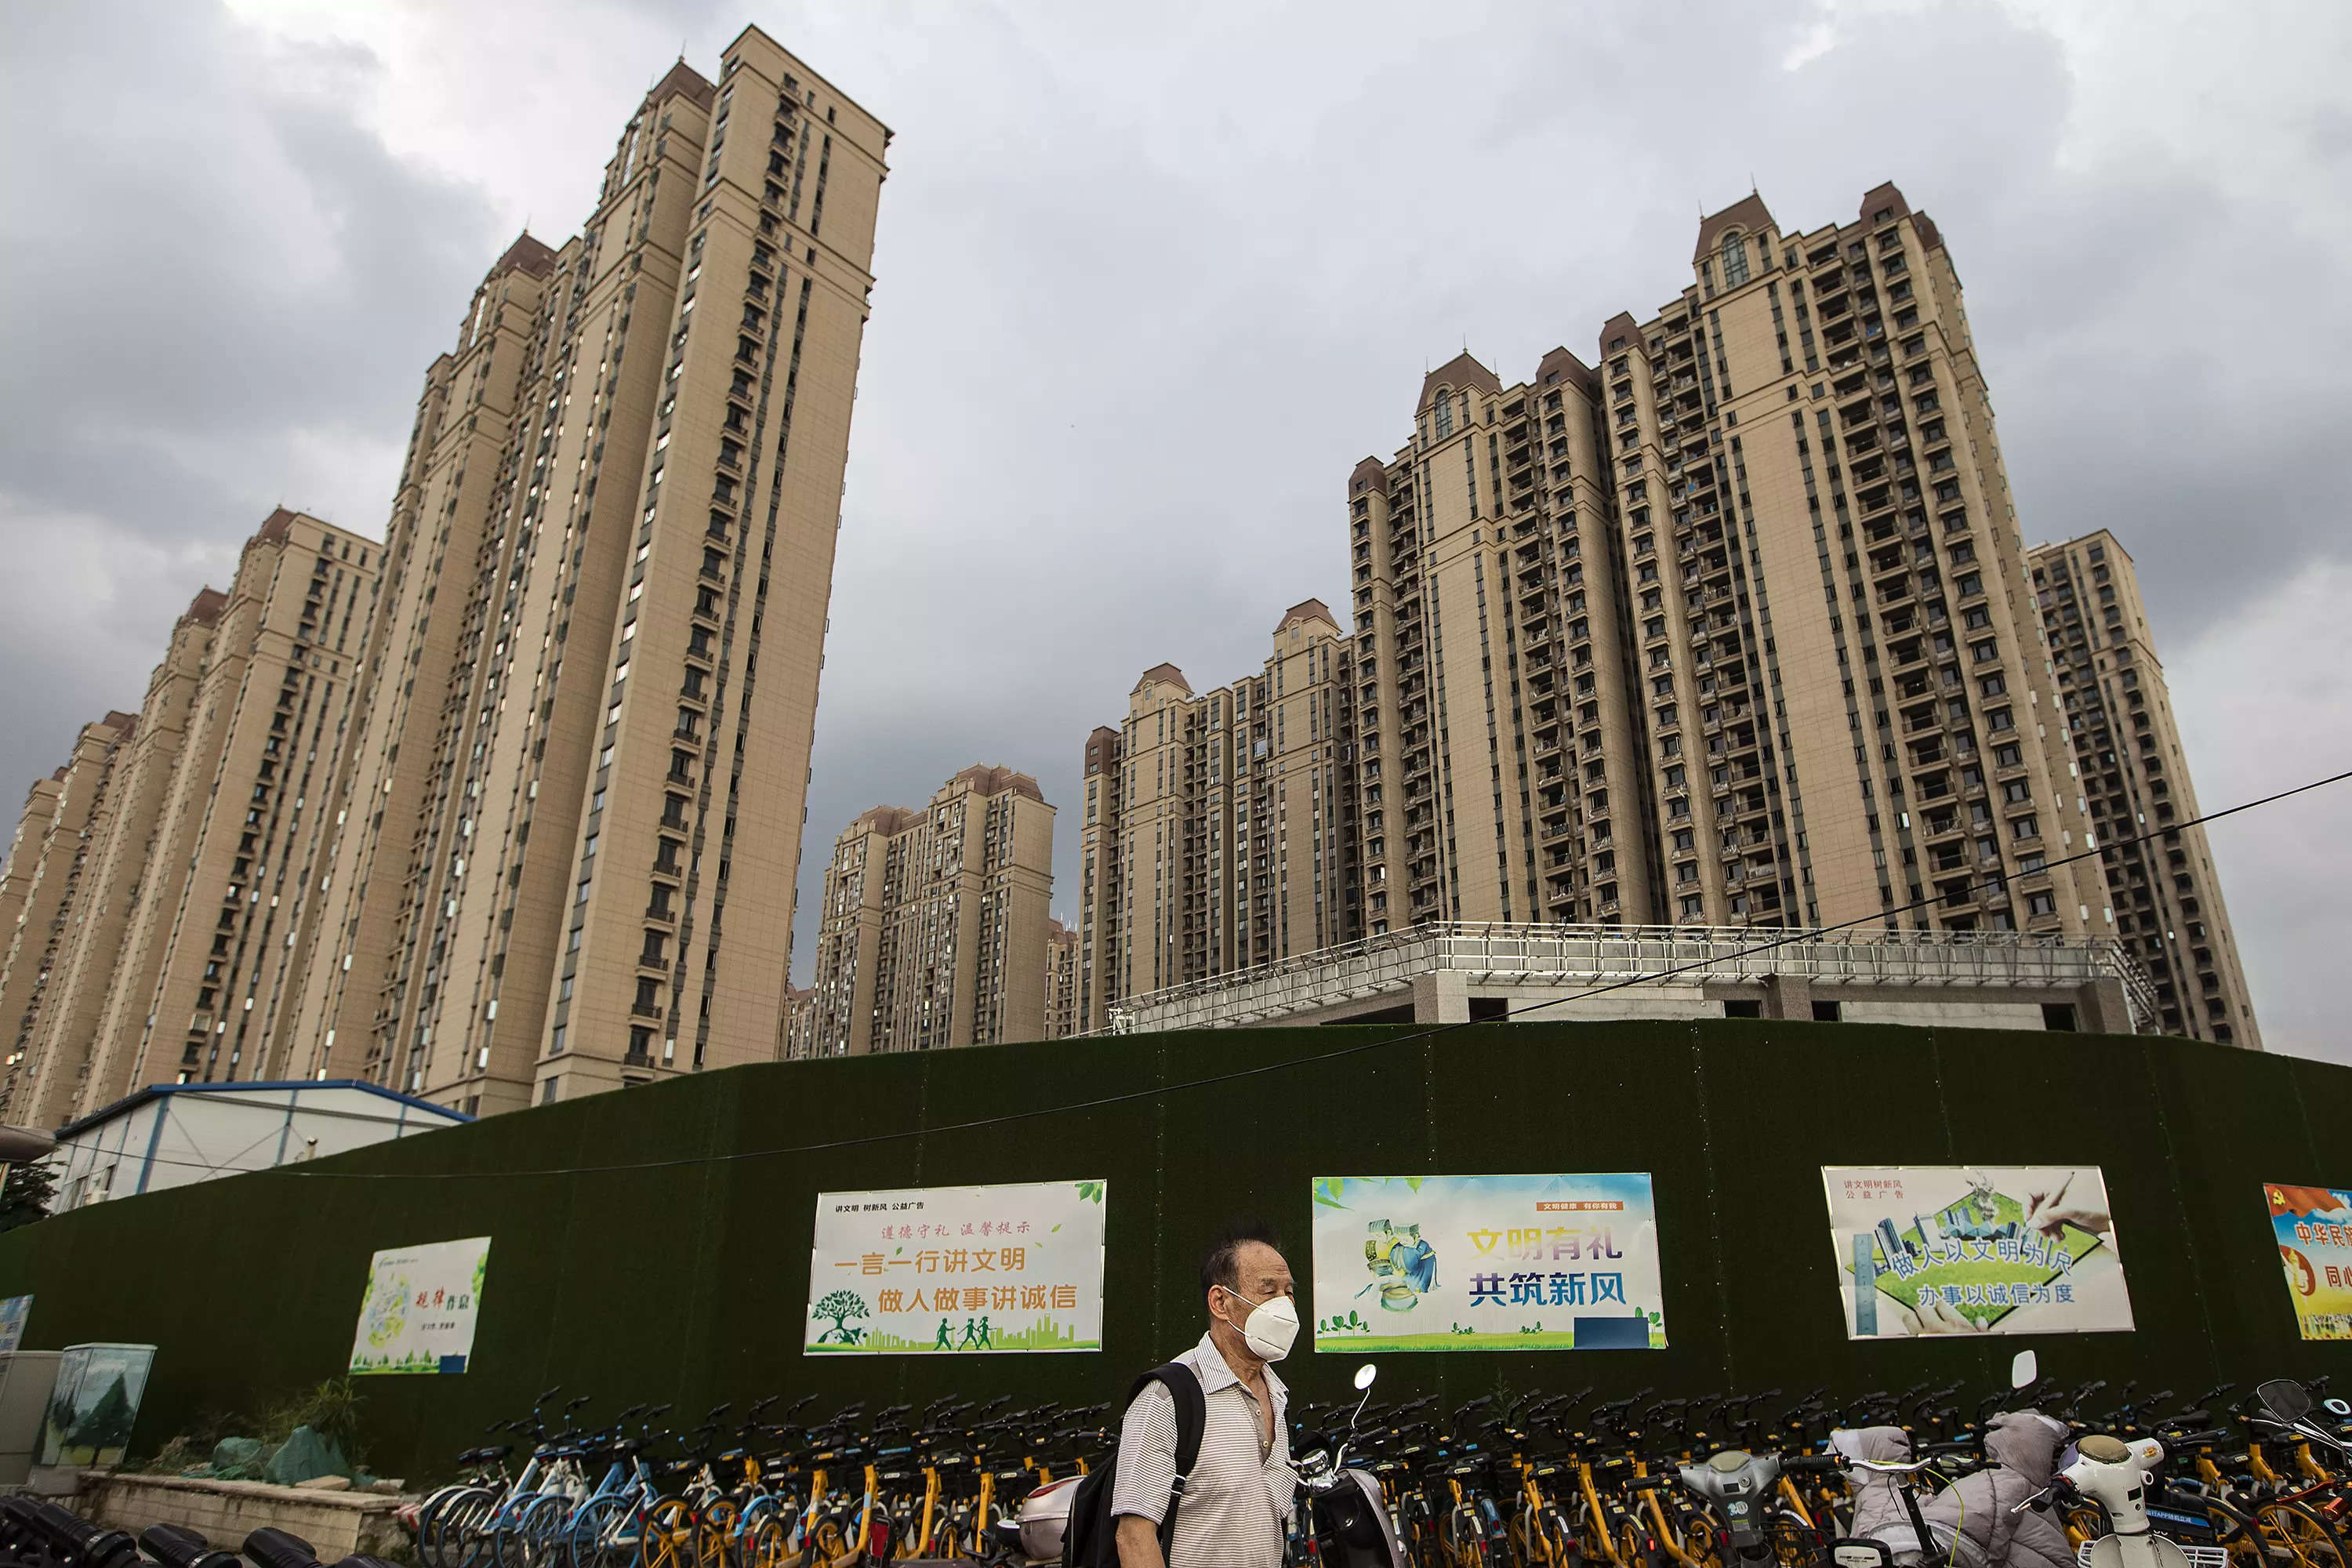 China Housing Bubble: China's bursting housing bubble will rock